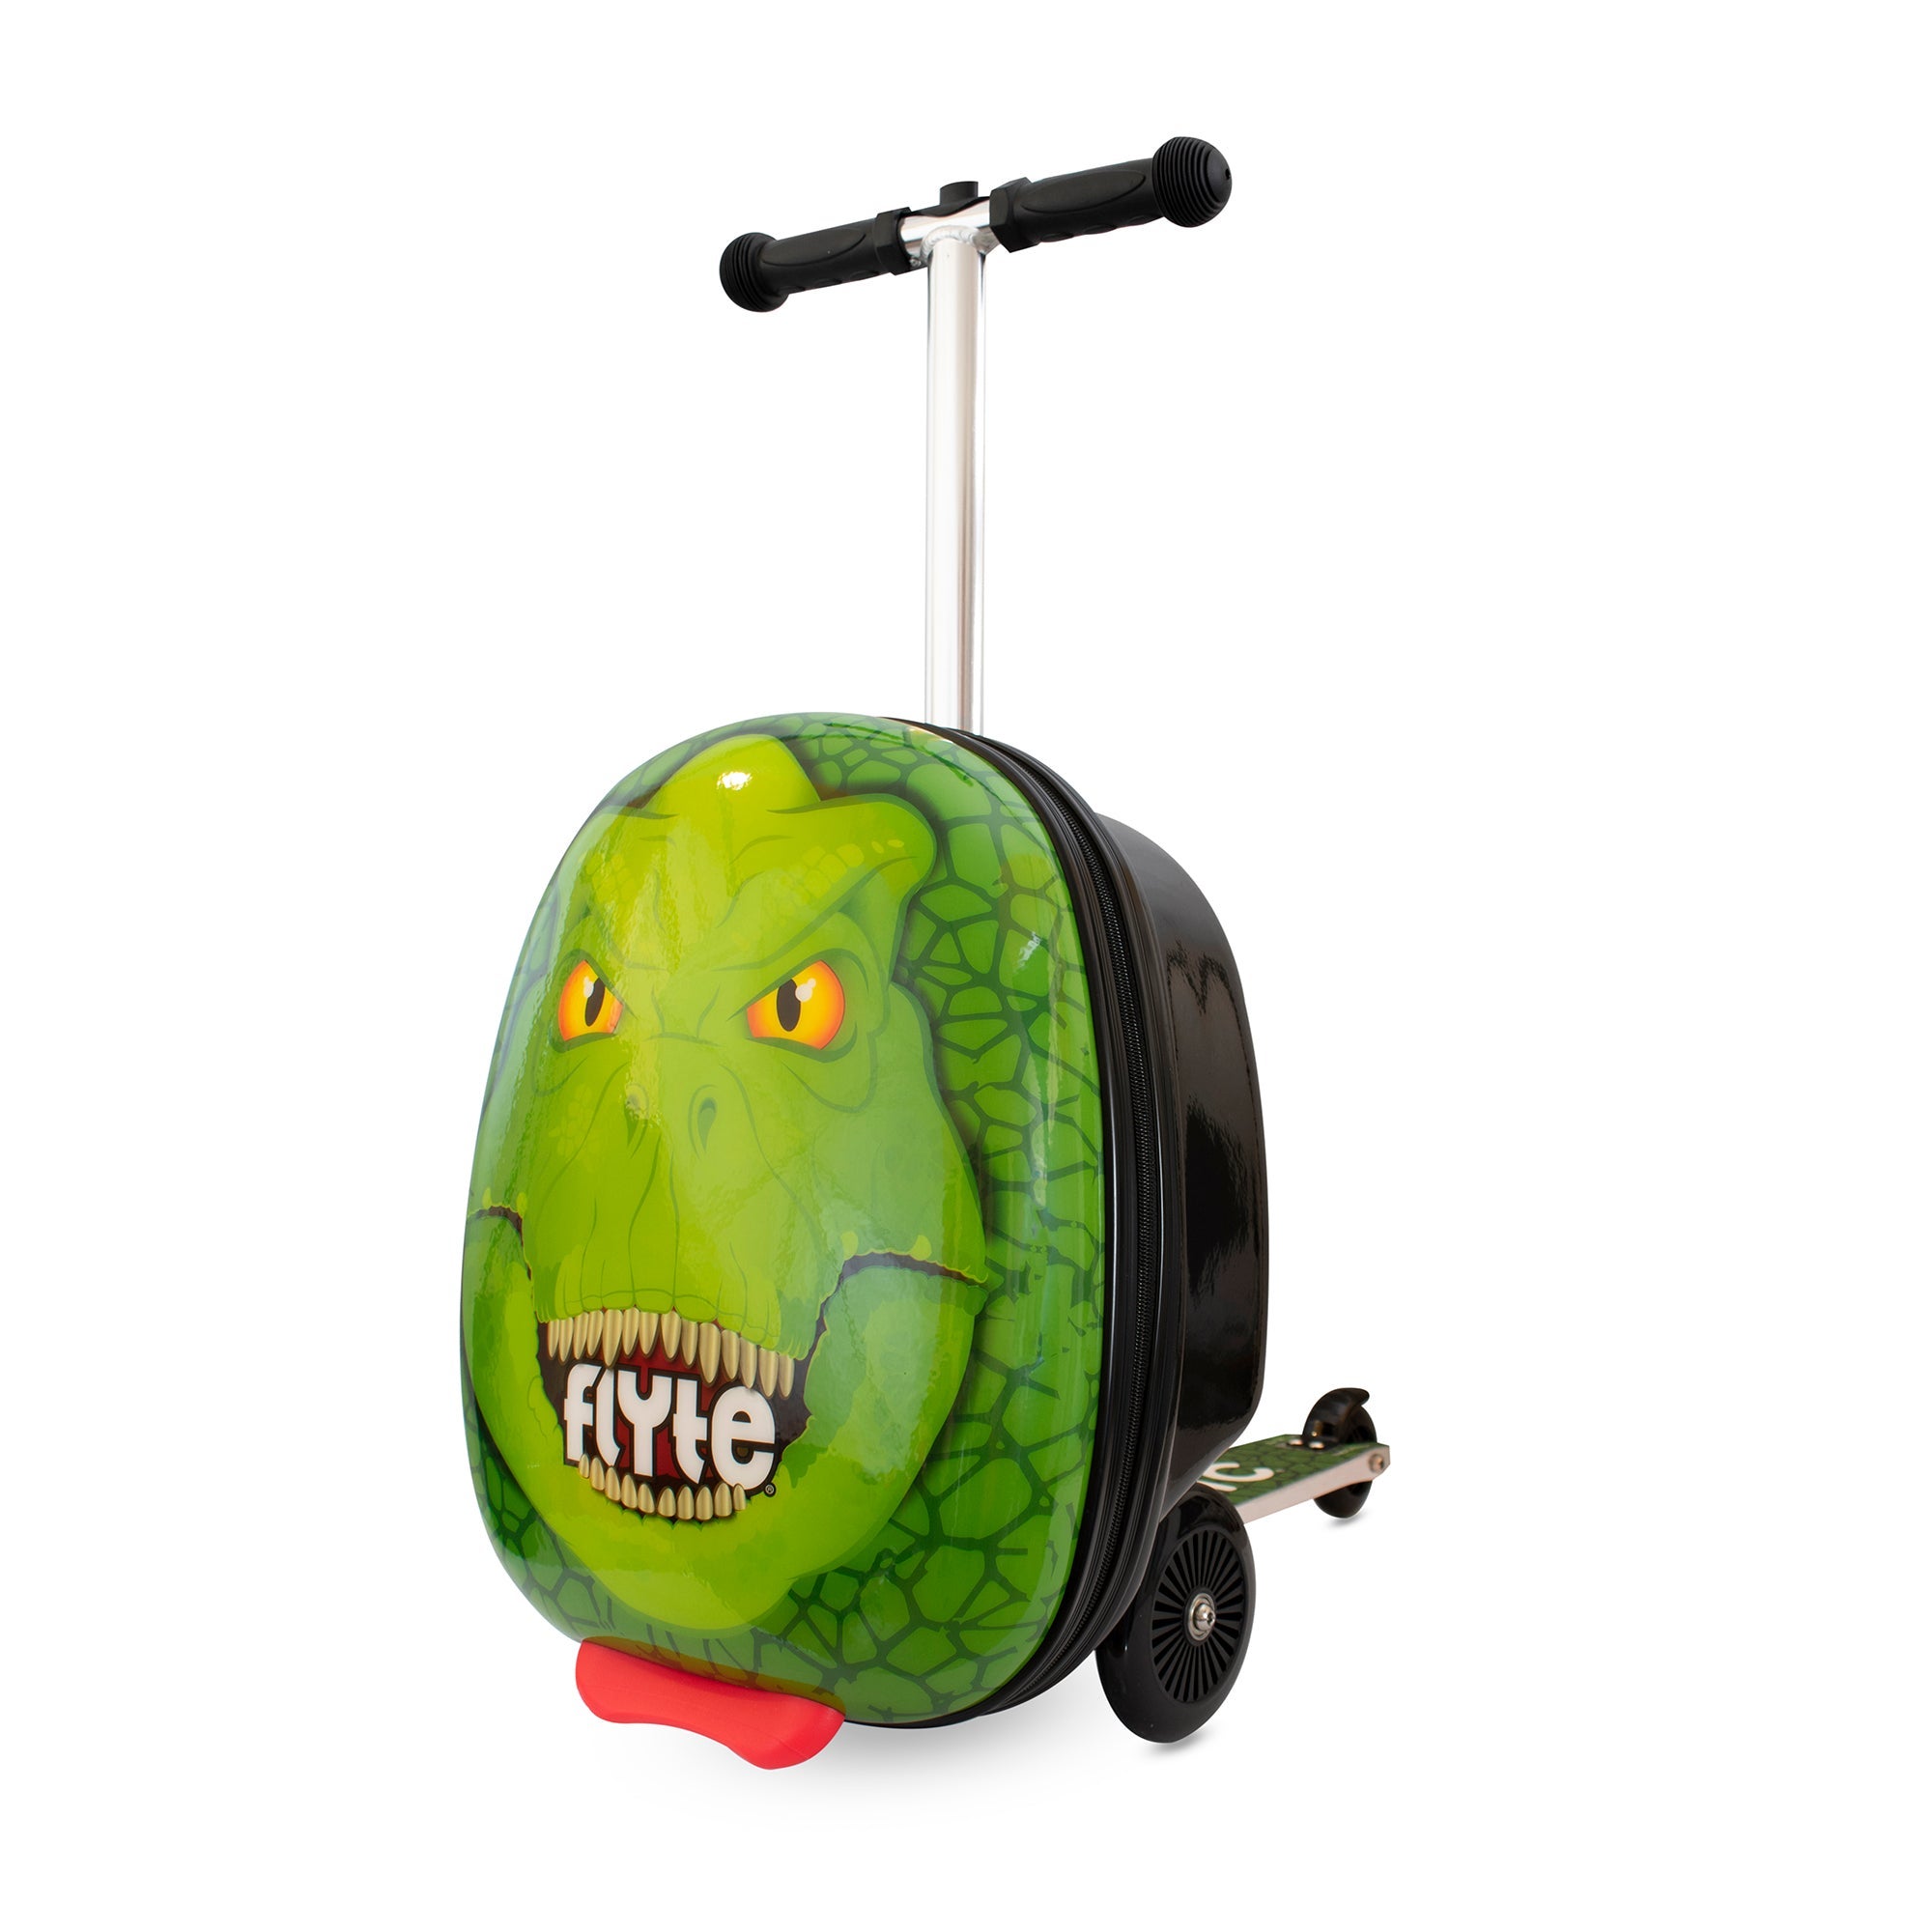 Zinc Flyte Darwin the Dinosaur Scooter Suitcase - Children's Luggage